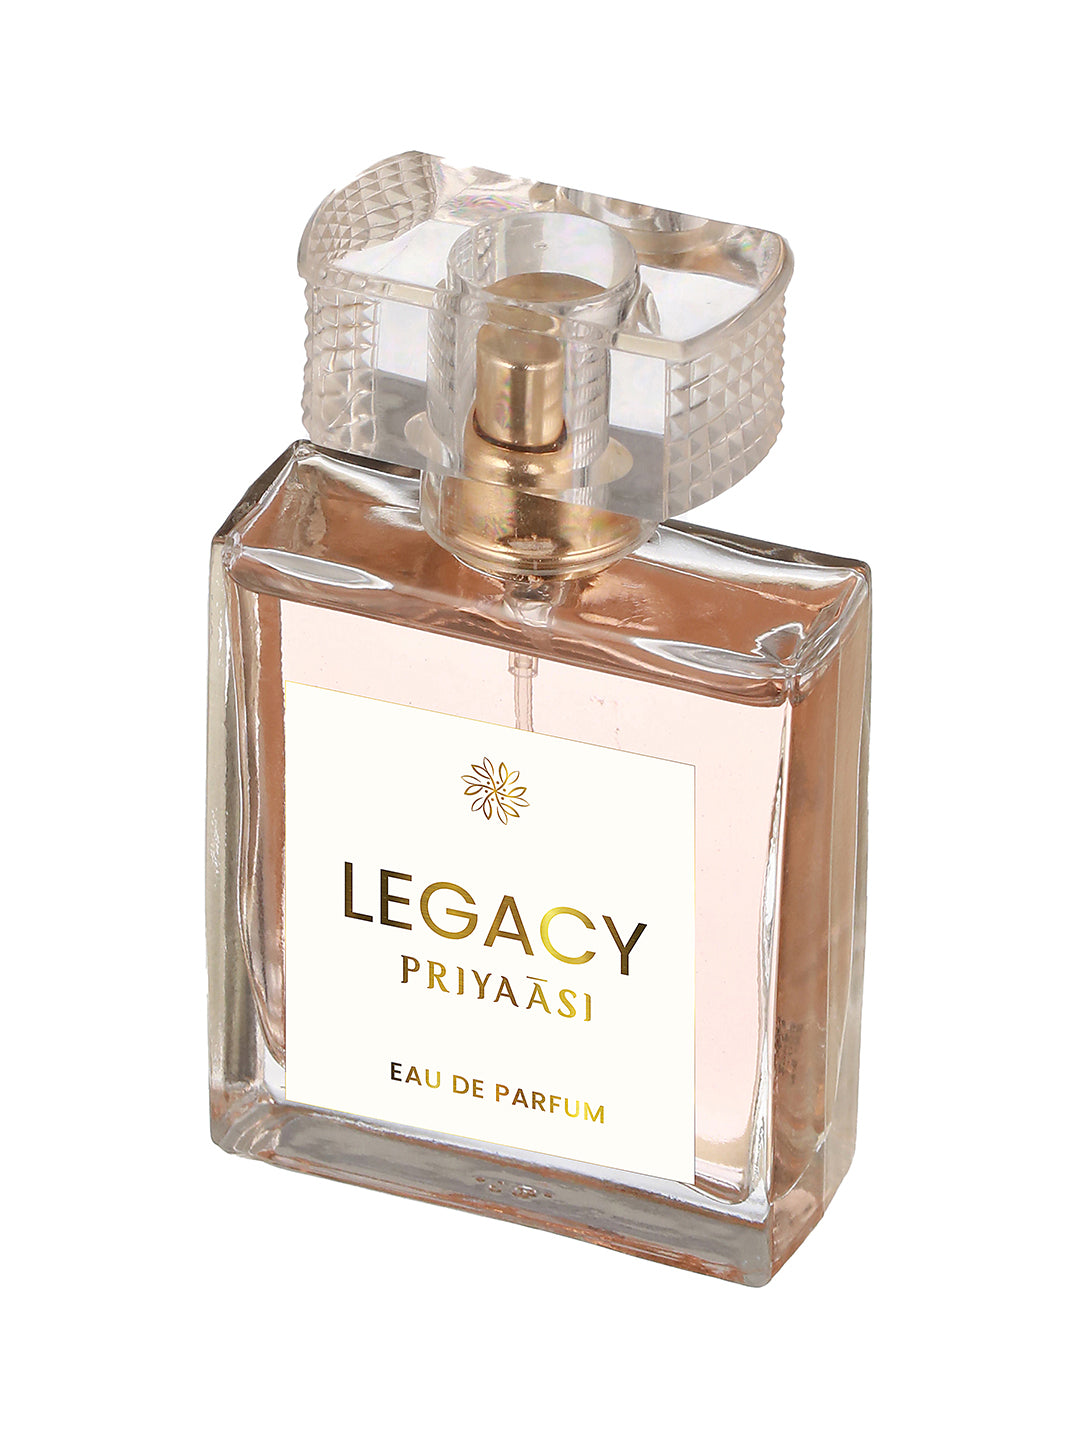 Essence Elegance - Blue Priyaasi Perfume Gift Box